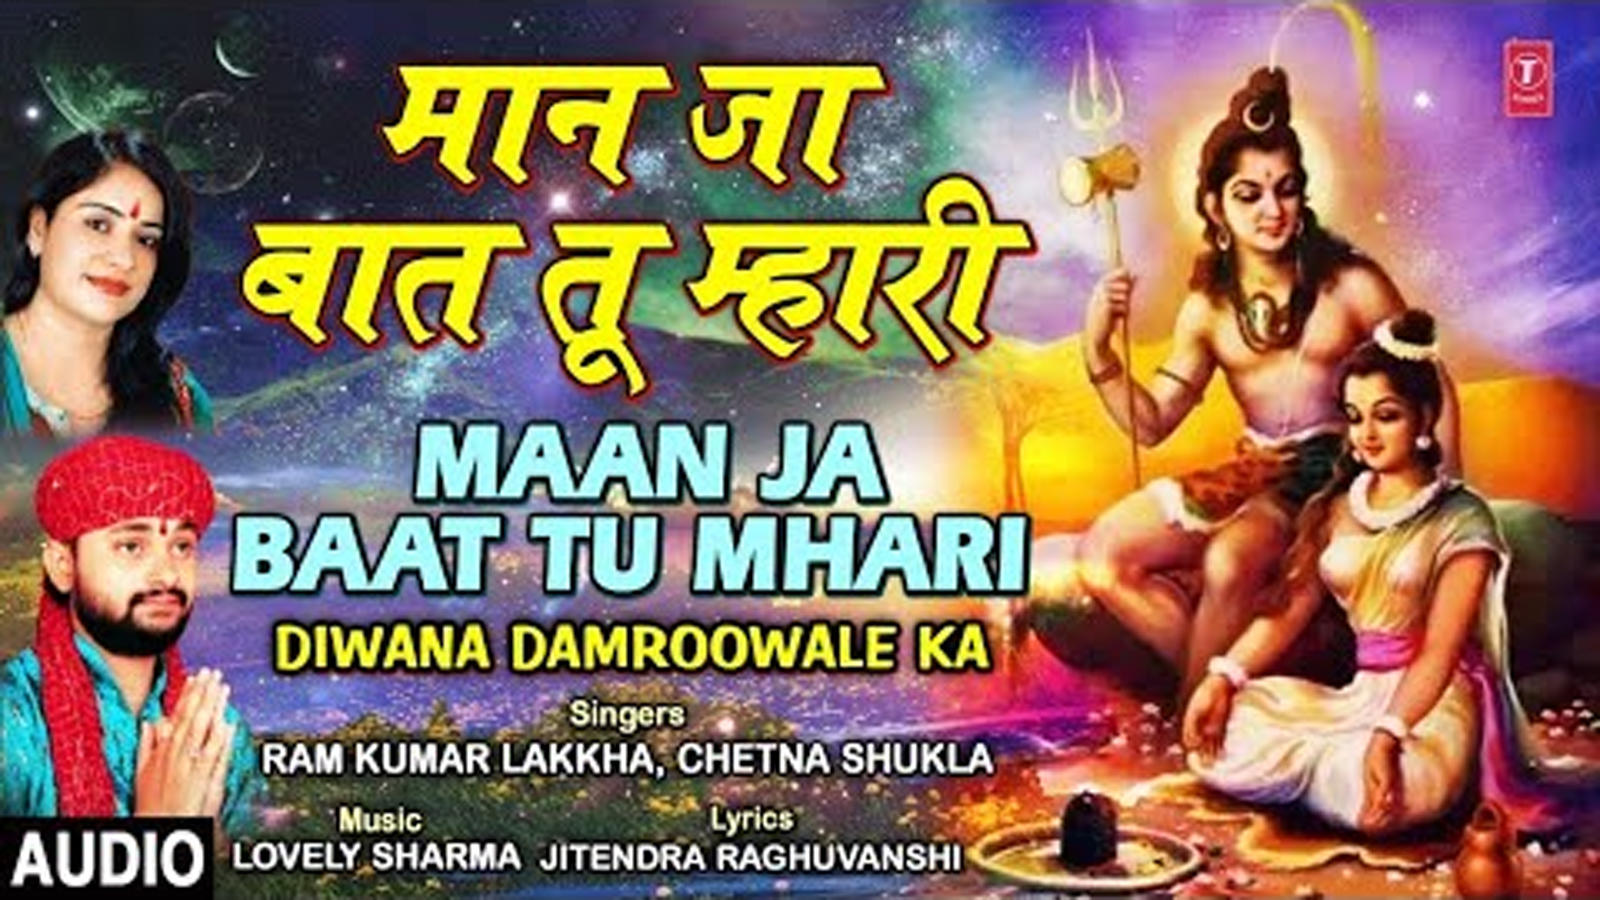 Hindi Bhakti Gana Bhajan Geet Video Song 2020: Latest Hindi Bhakti Geet  'Maan Ja Baat Tu Mhari' Sung by Ram Kumar Lakkha, Chetna Shukla